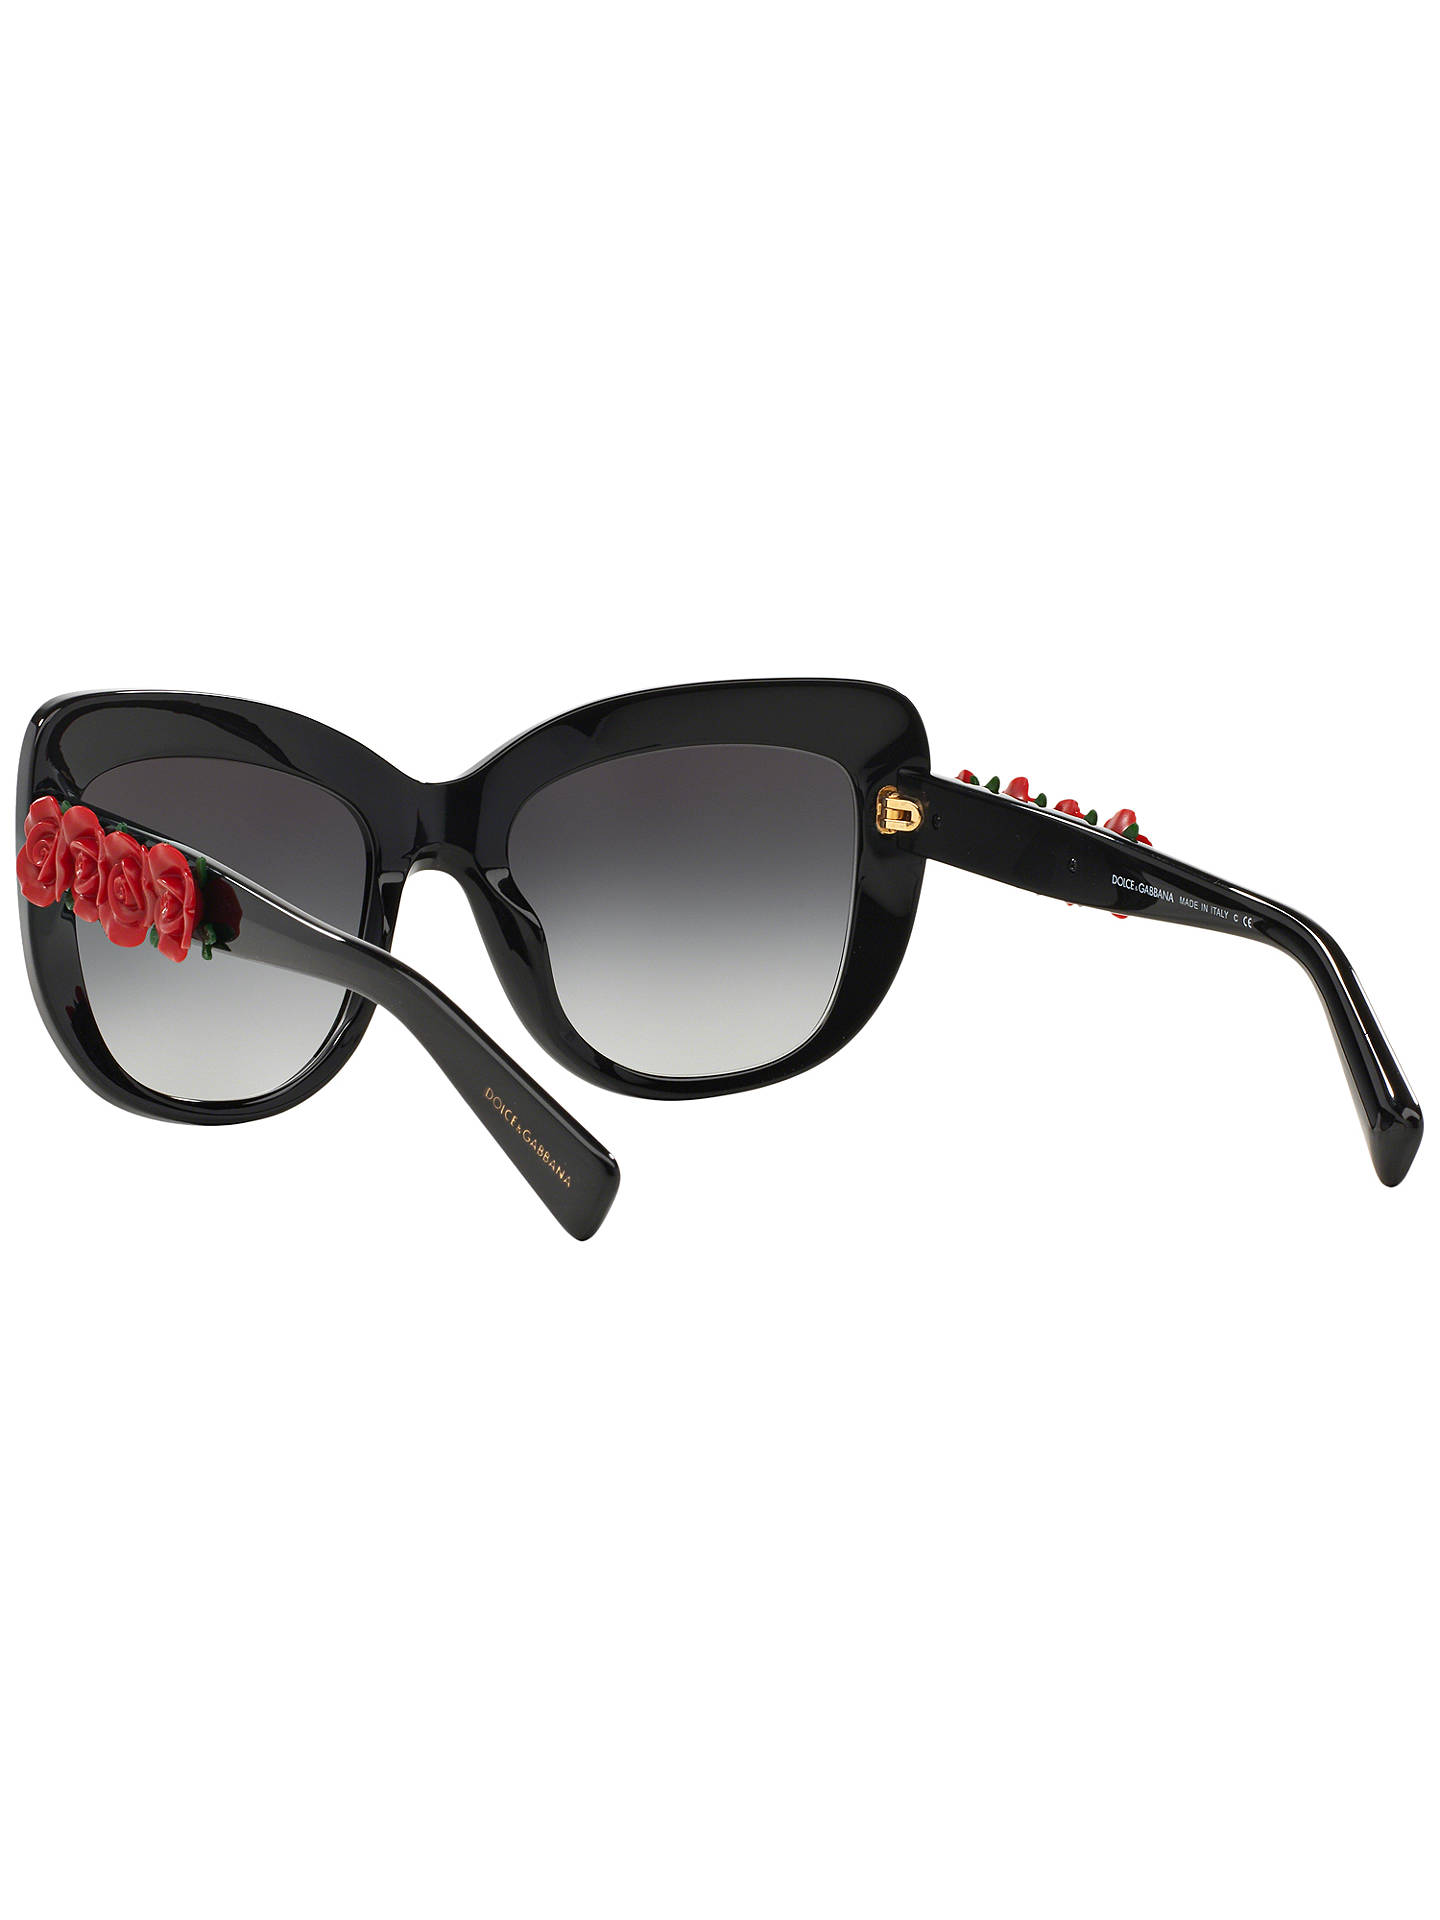 Dolce & Gabbana DG4252 Cat's Eye Sunglasses, Black at John Lewis & Partners